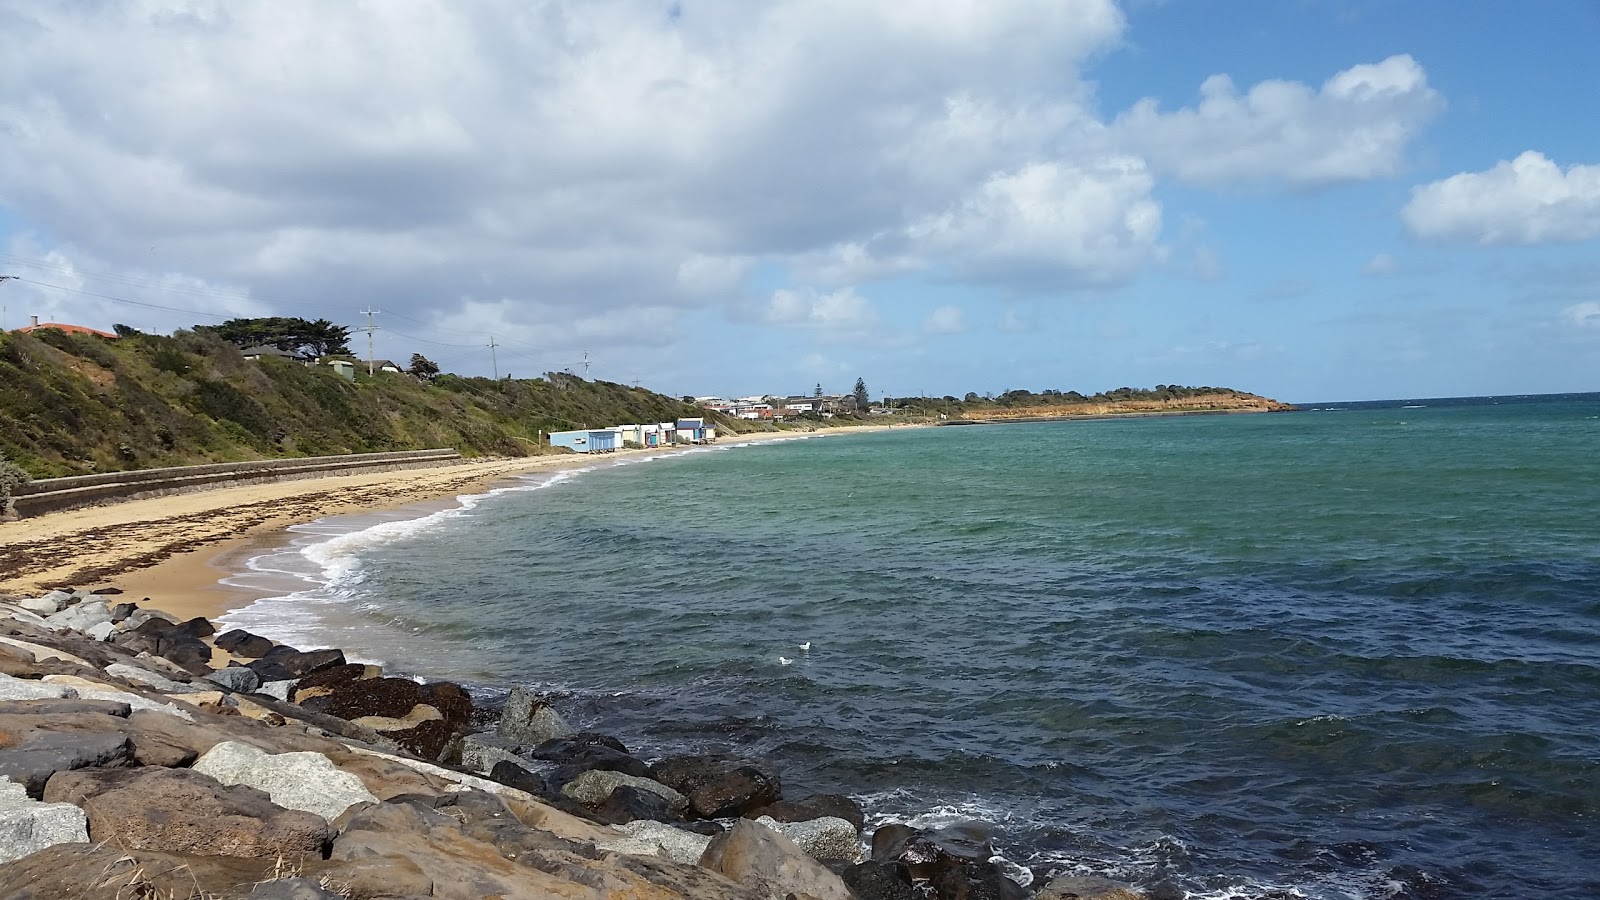 Photo of Mornington Peninsula Beach - popular place among relax connoisseurs